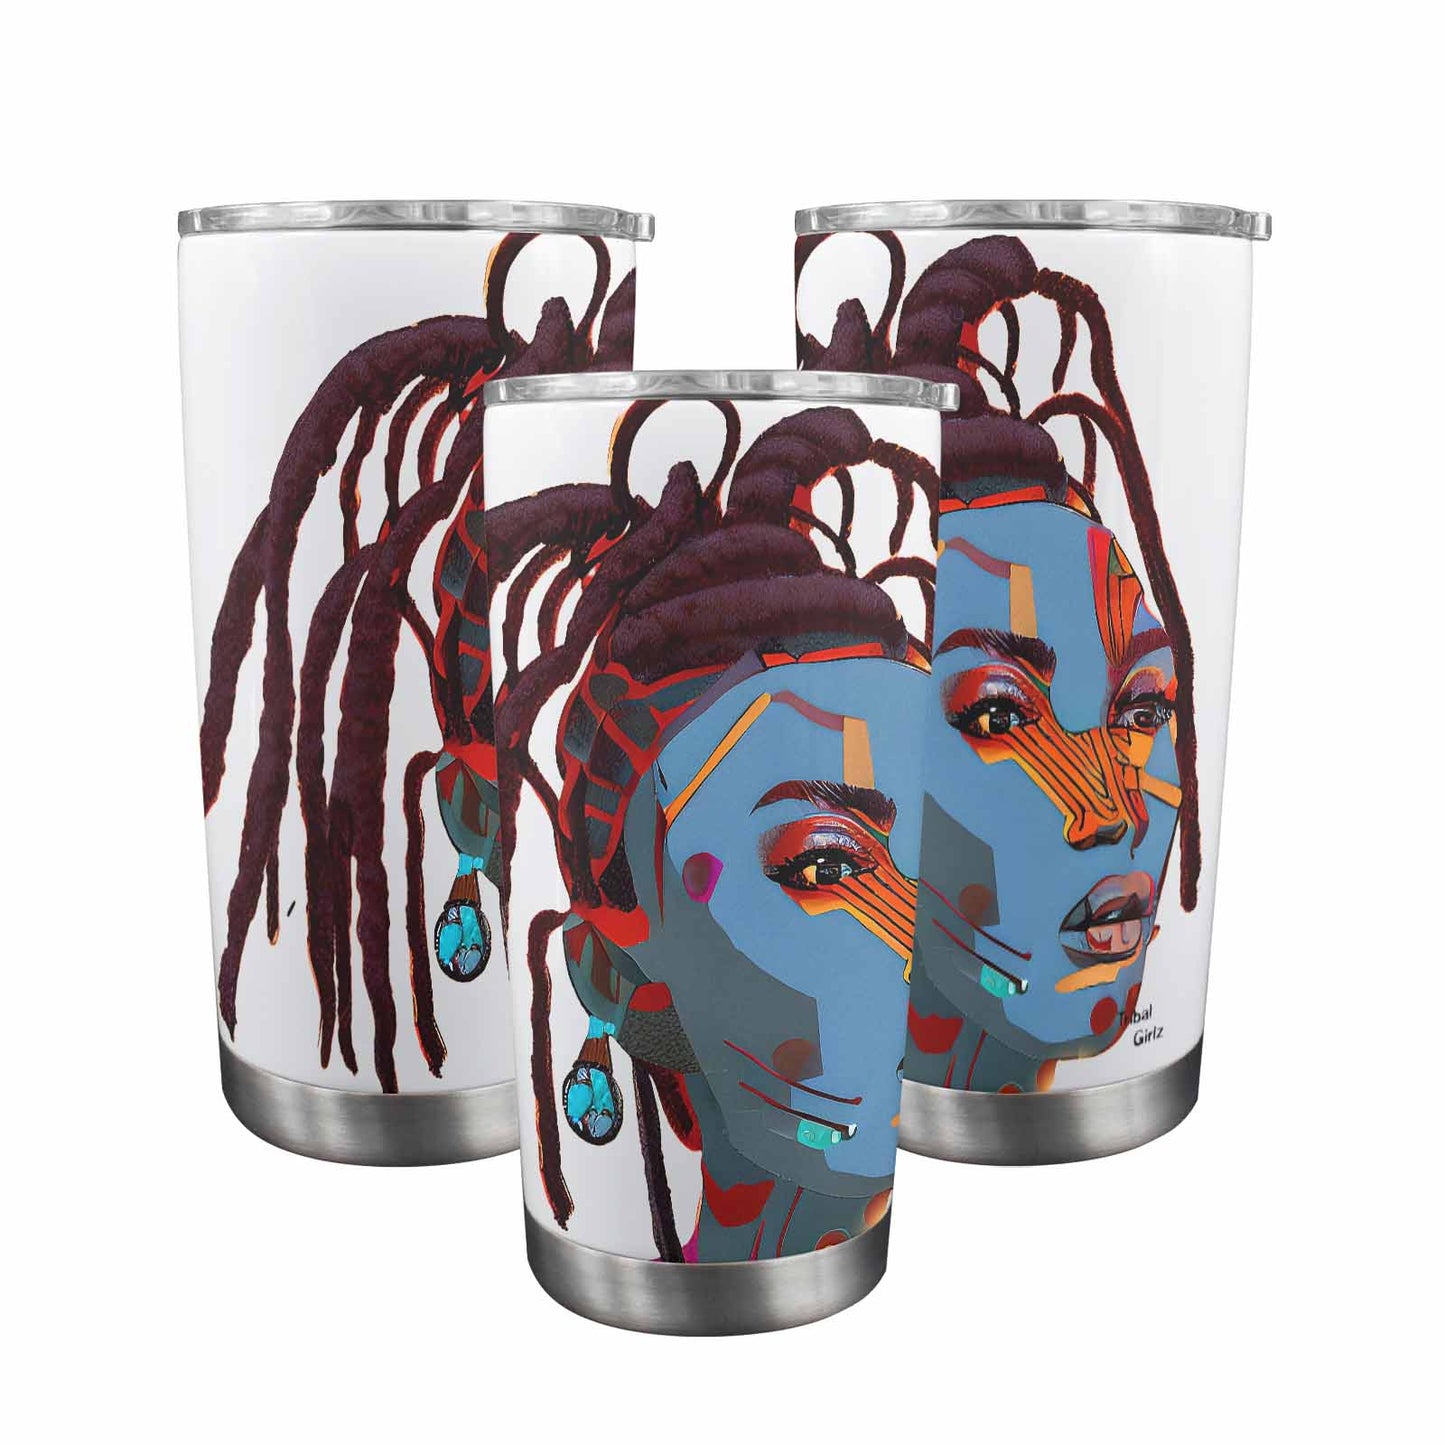 Dreads & Braids, Transparent Tumbler, mug, african tribal, outline BL, Fulangiara 23